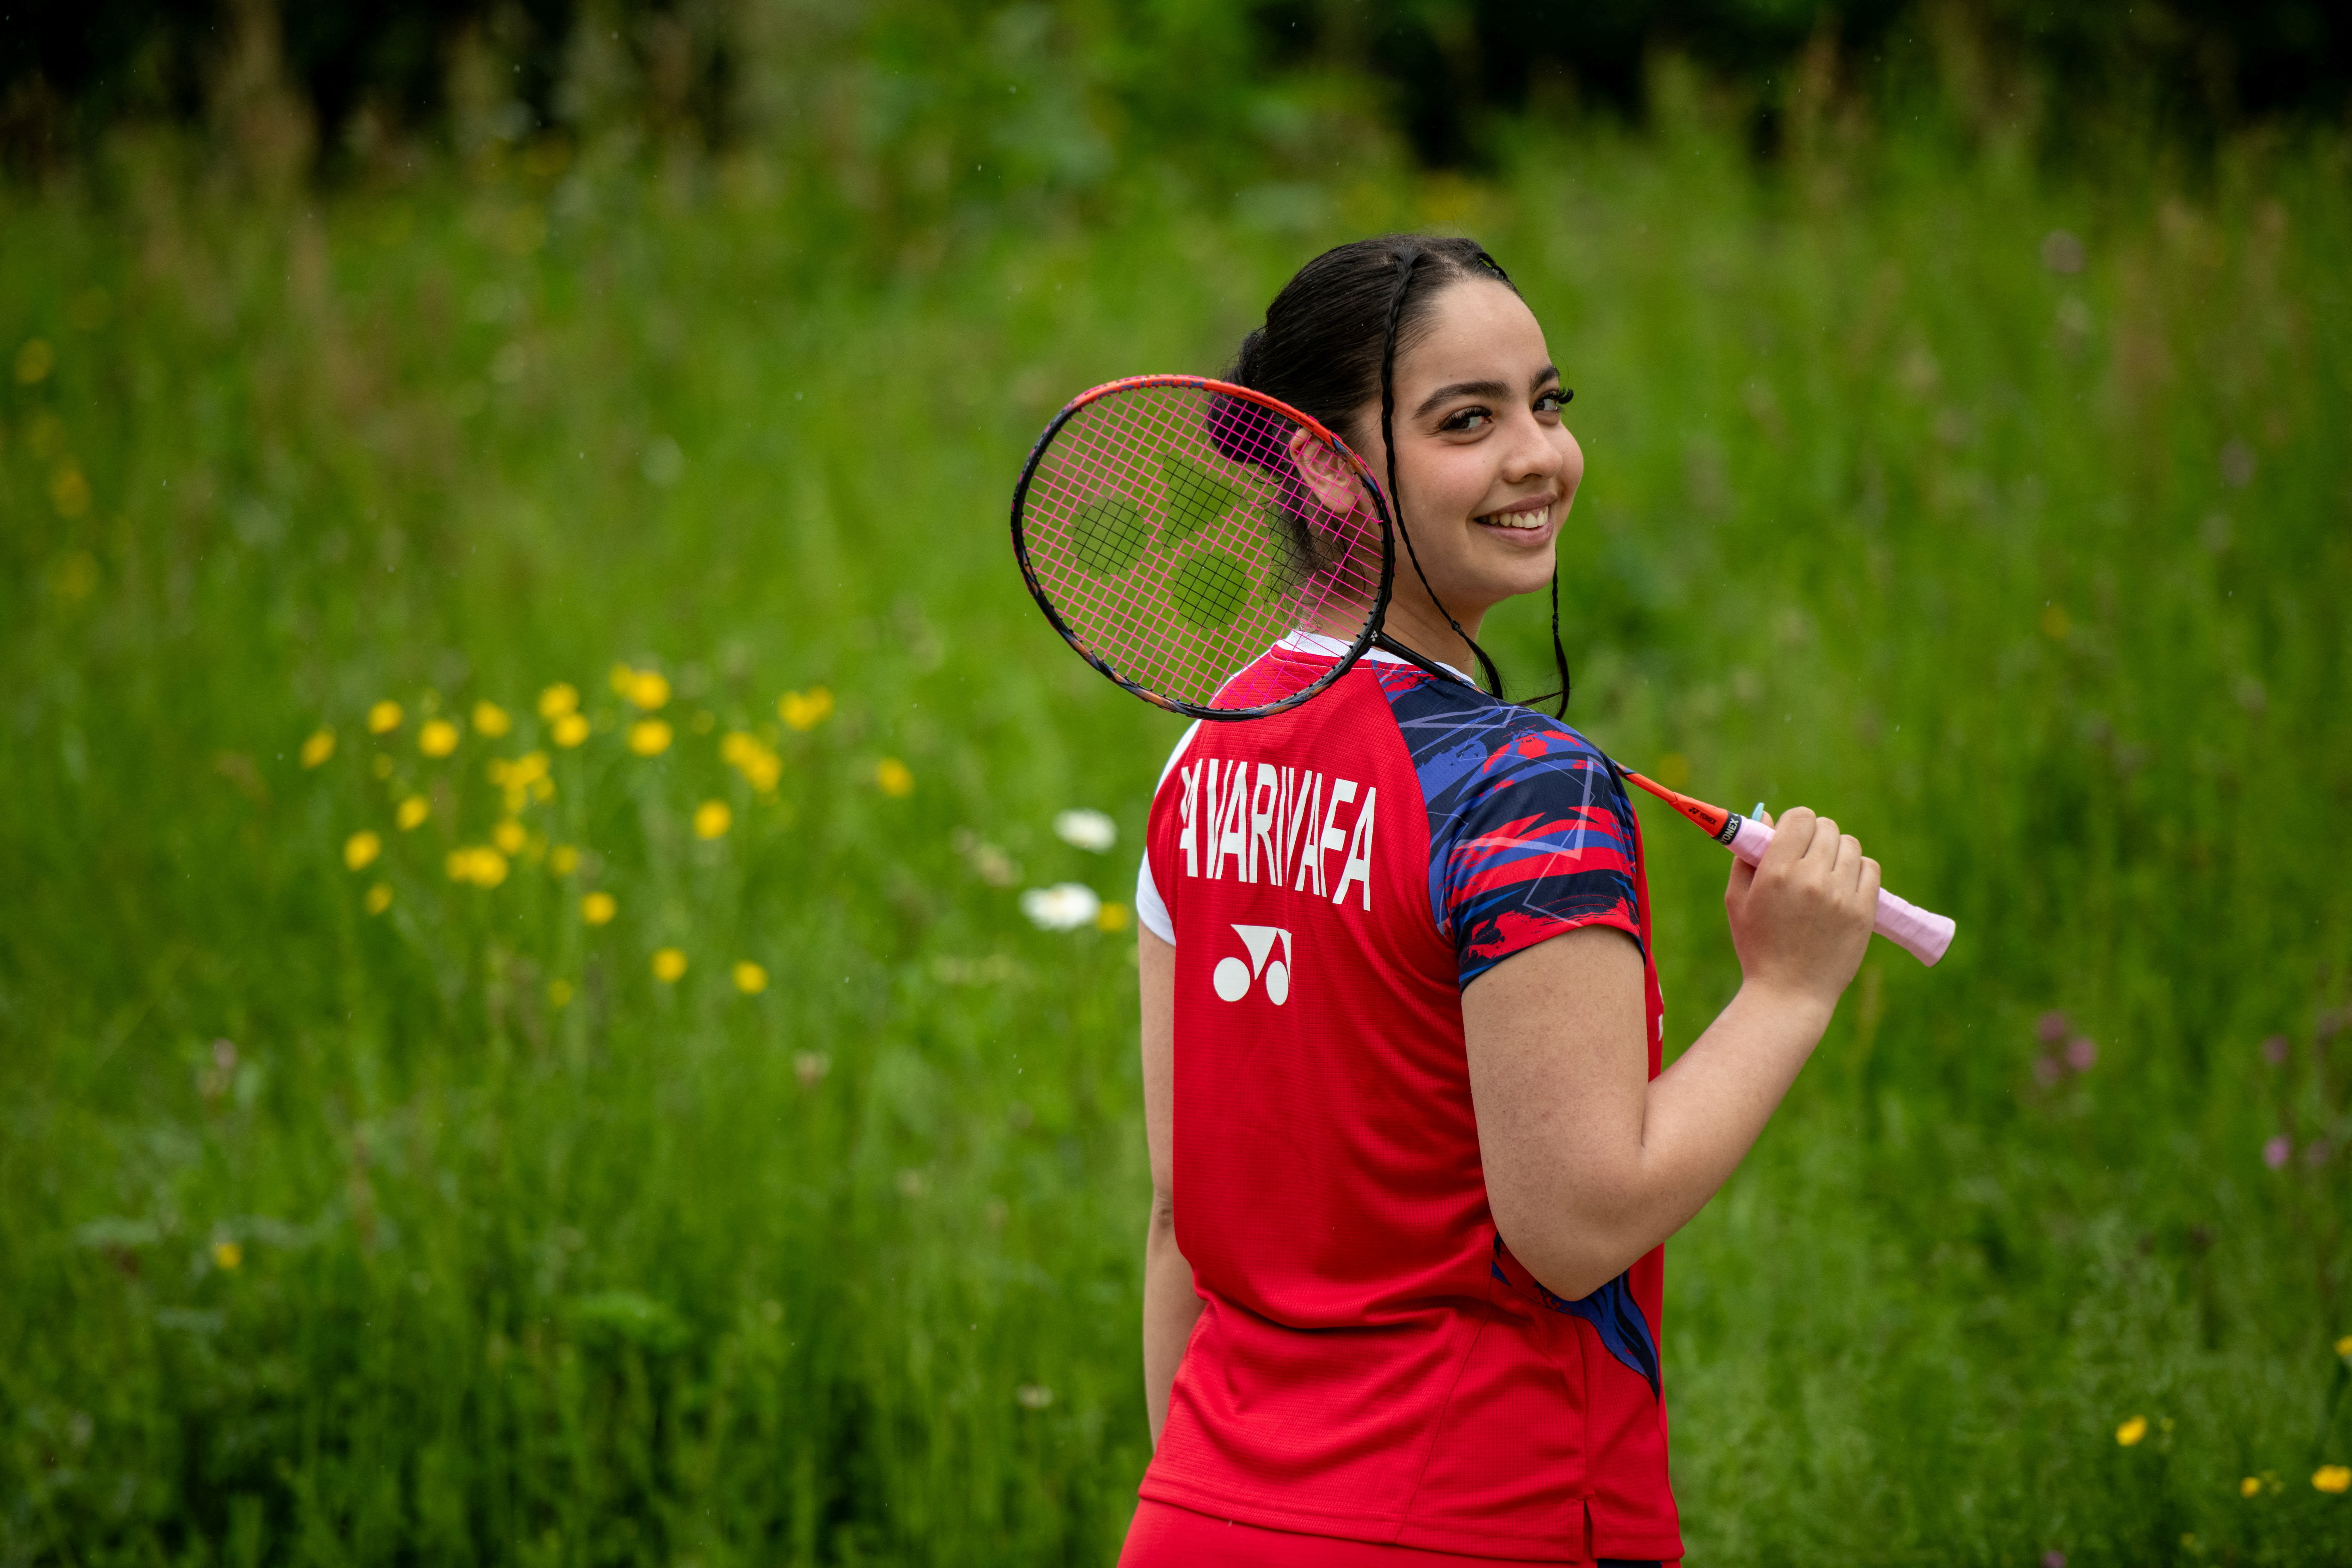 Dorsa Yavarivafa, badminton player selected to represent the IOC Refugee Olympic Team